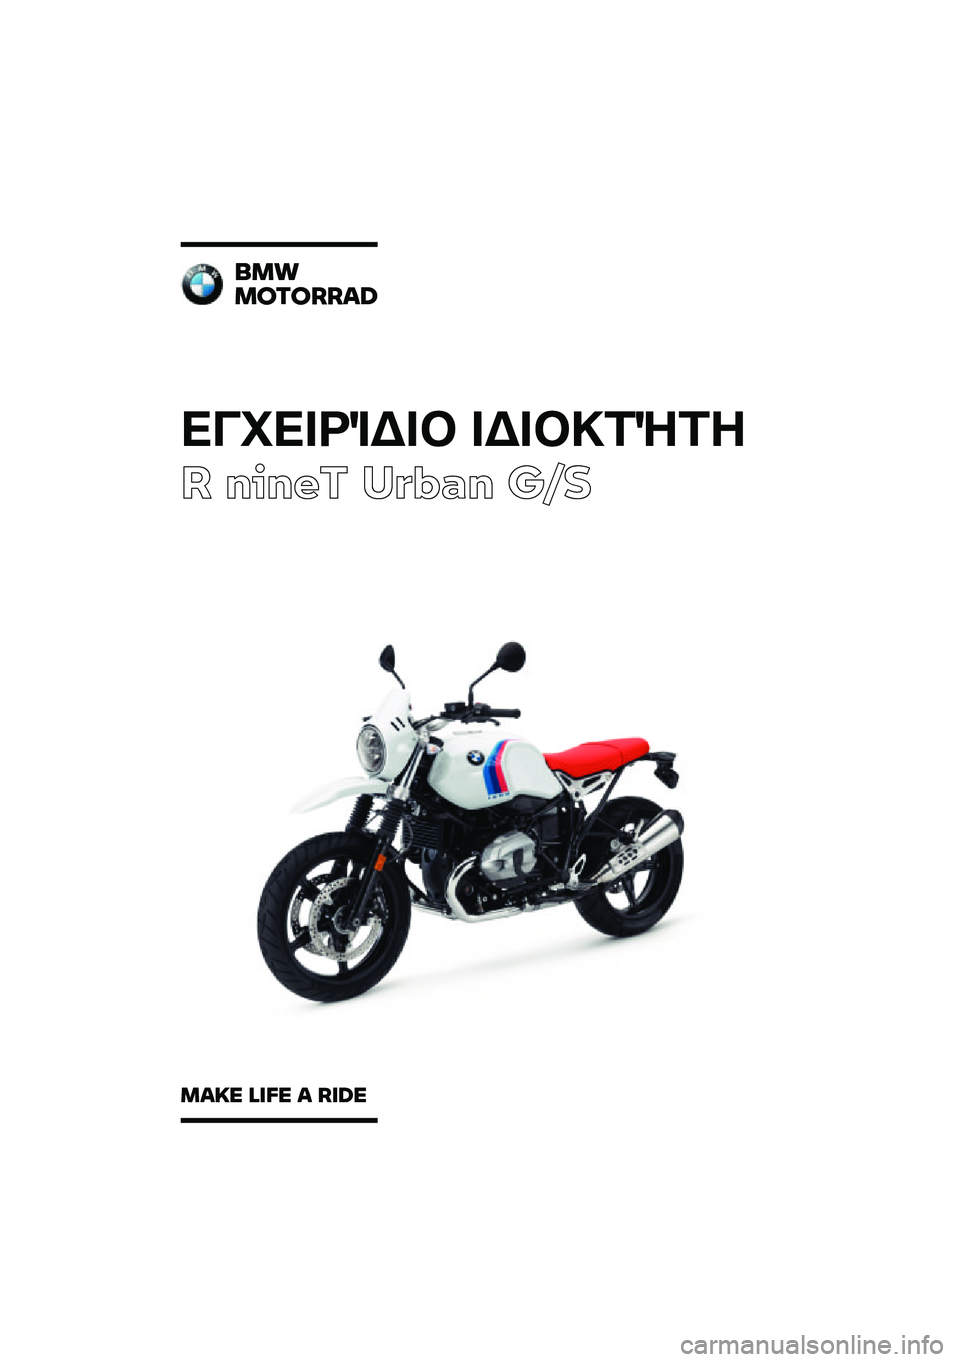 BMW MOTORRAD R NINE T URVAN G/S 2020  Εγχειρίδιο ιδιοκτήτη (in Greek) ��������\b��	 ��\b��	�
��\f��
� ����� ��\b�	�
� ��\f�
���
�������\b�	
��\b�
� �\f�
�� �\b ��
�	� 